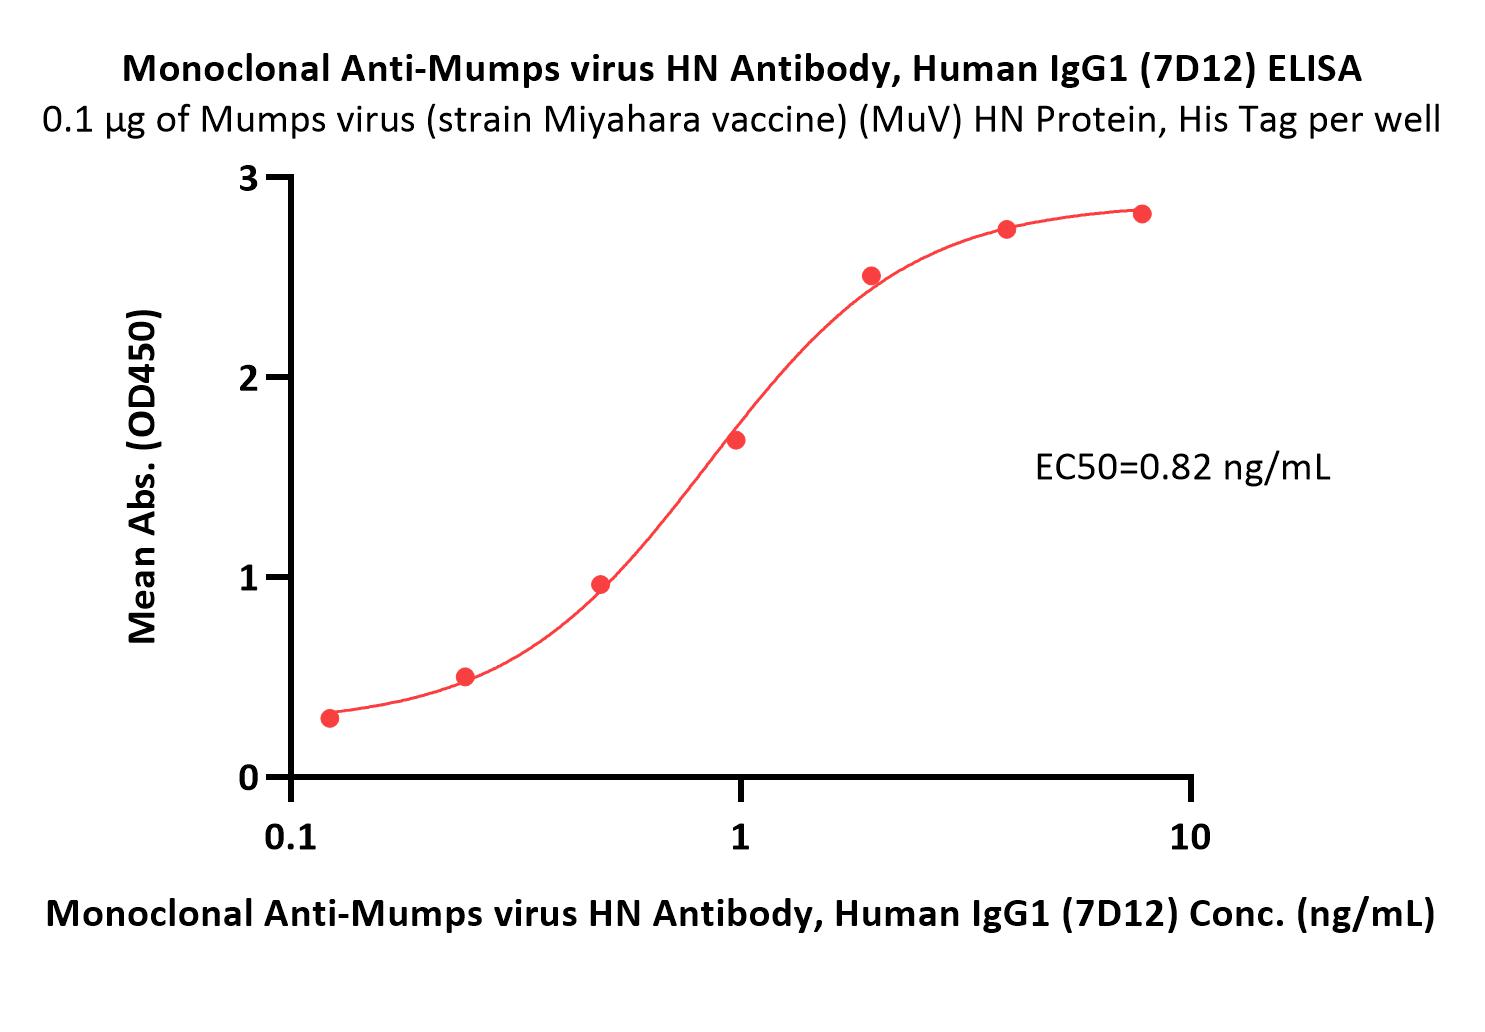 Mumps virus HN ELISA